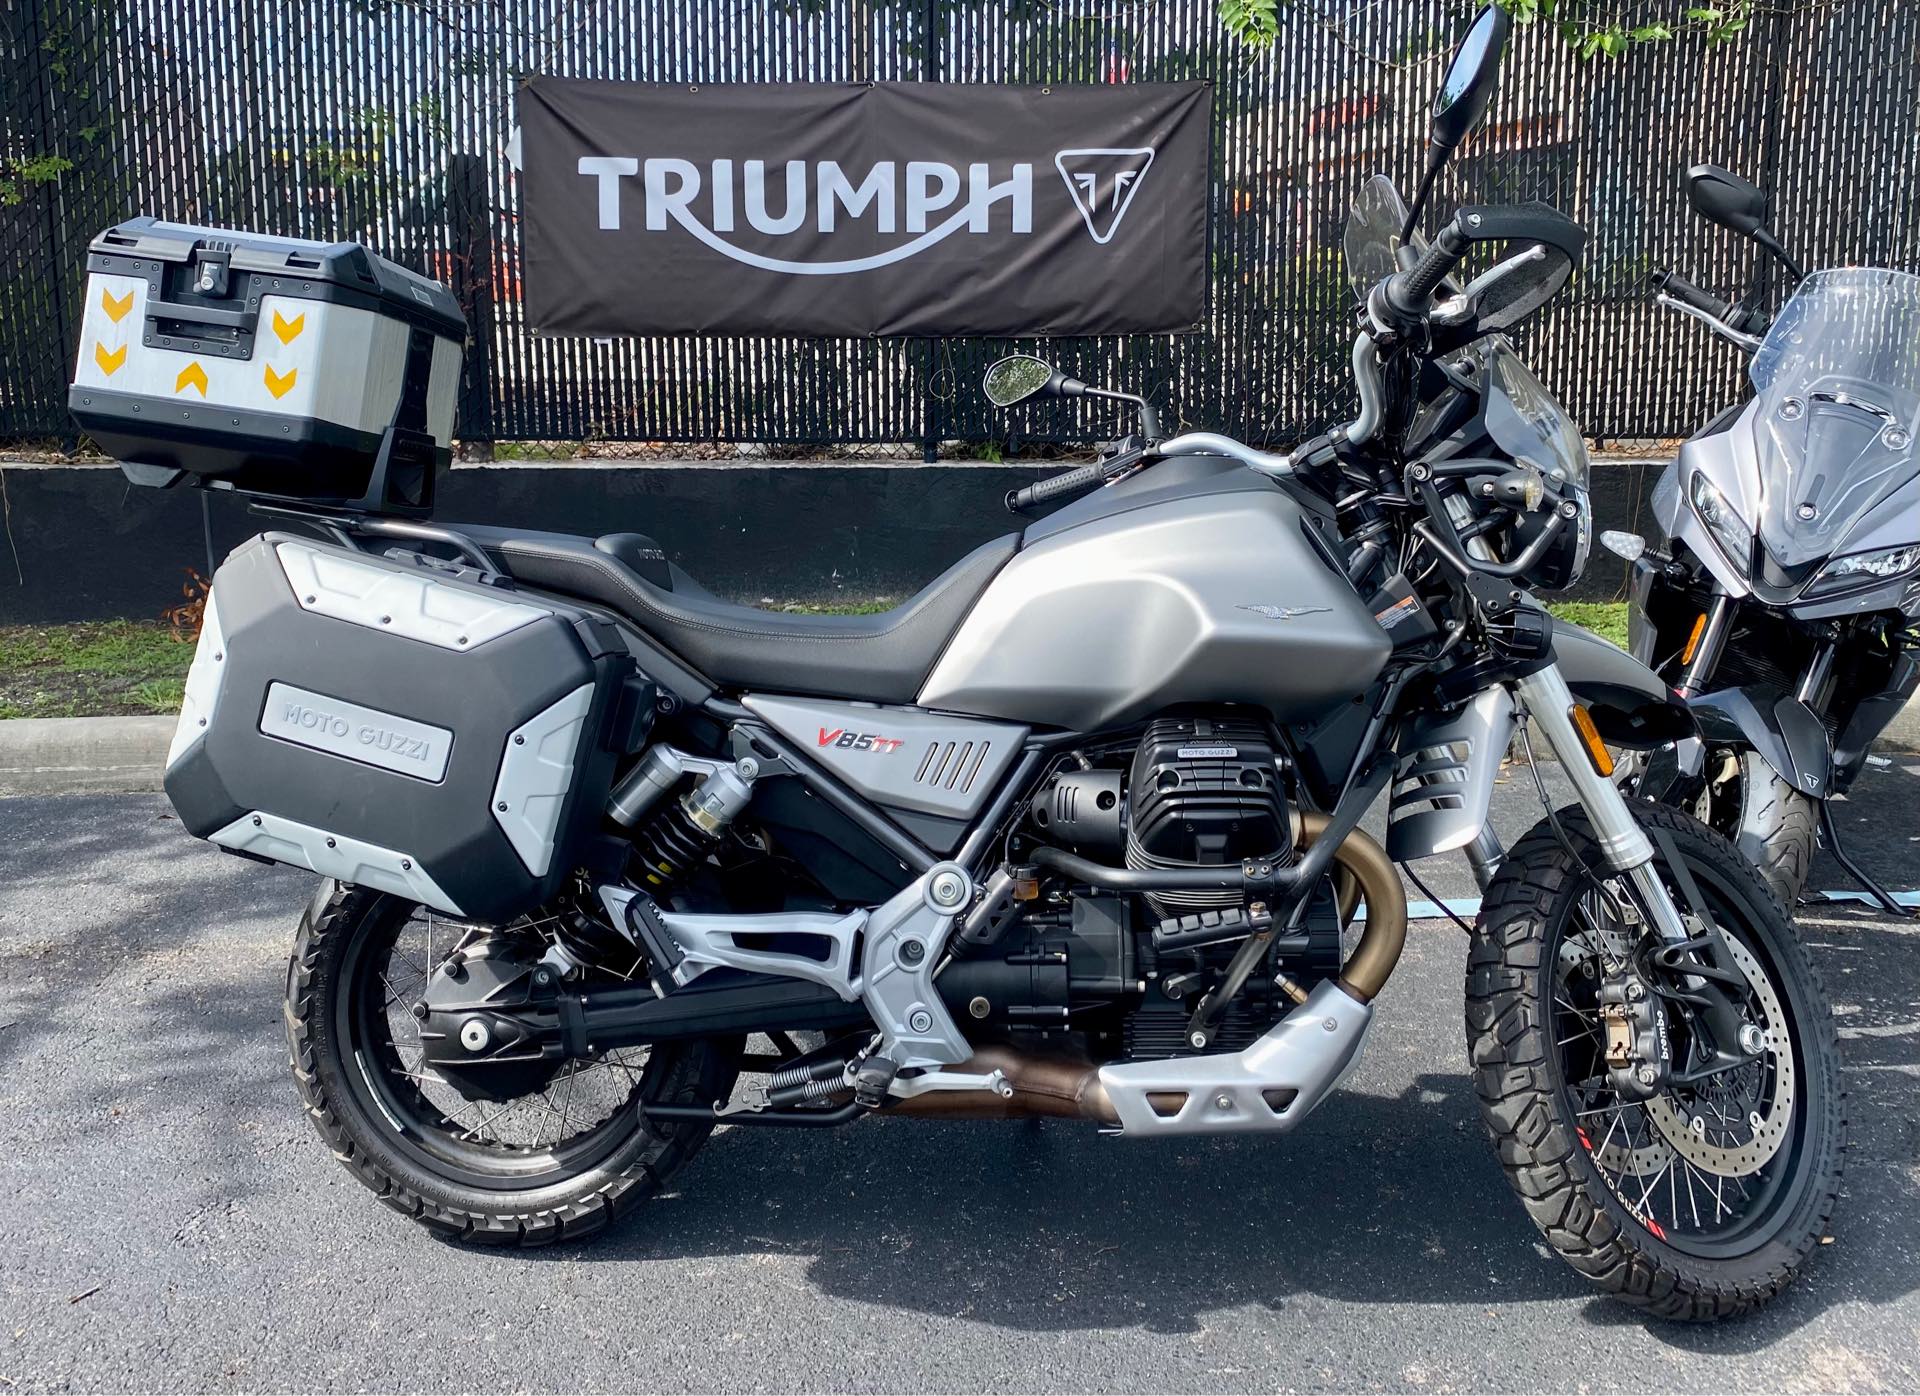 2020 Moto Guzzi V85 TT E4 at Tampa Triumph, Tampa, FL 33614